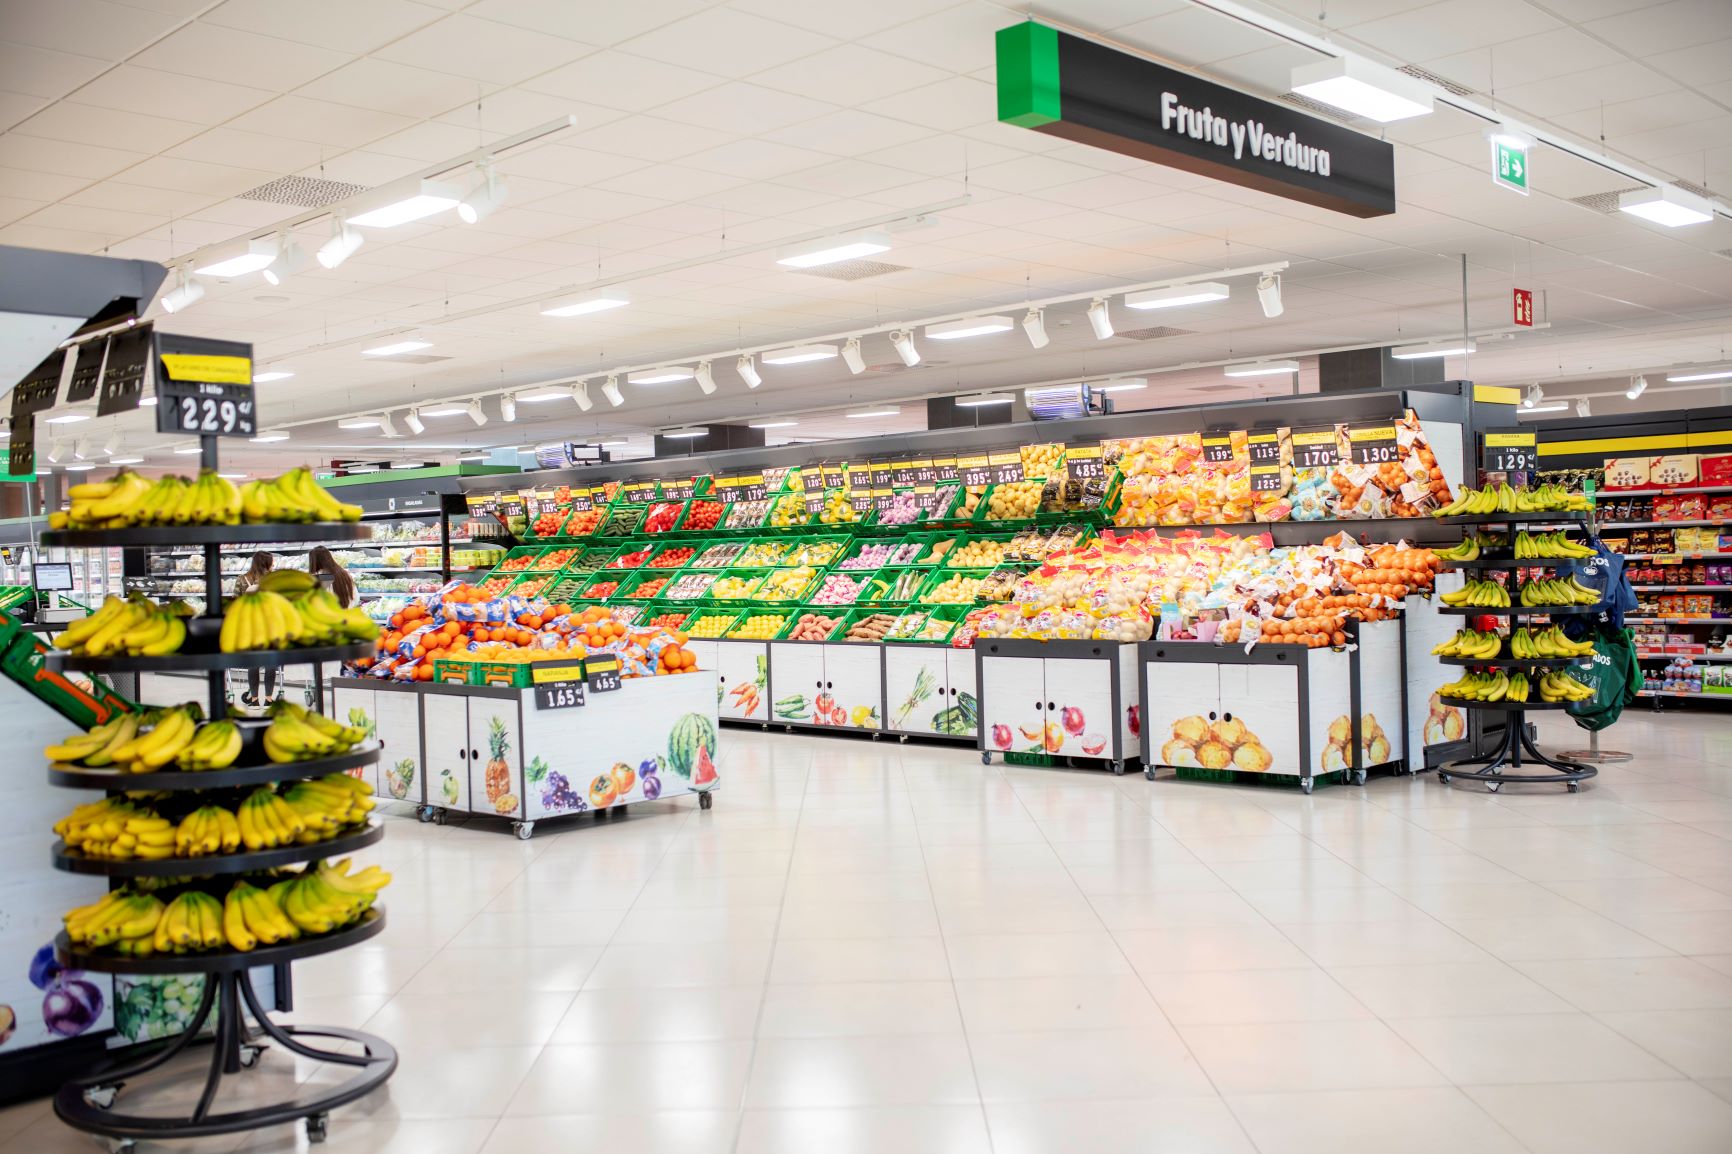 Spanish supermarkets gain market share during Covid-19 lockdown